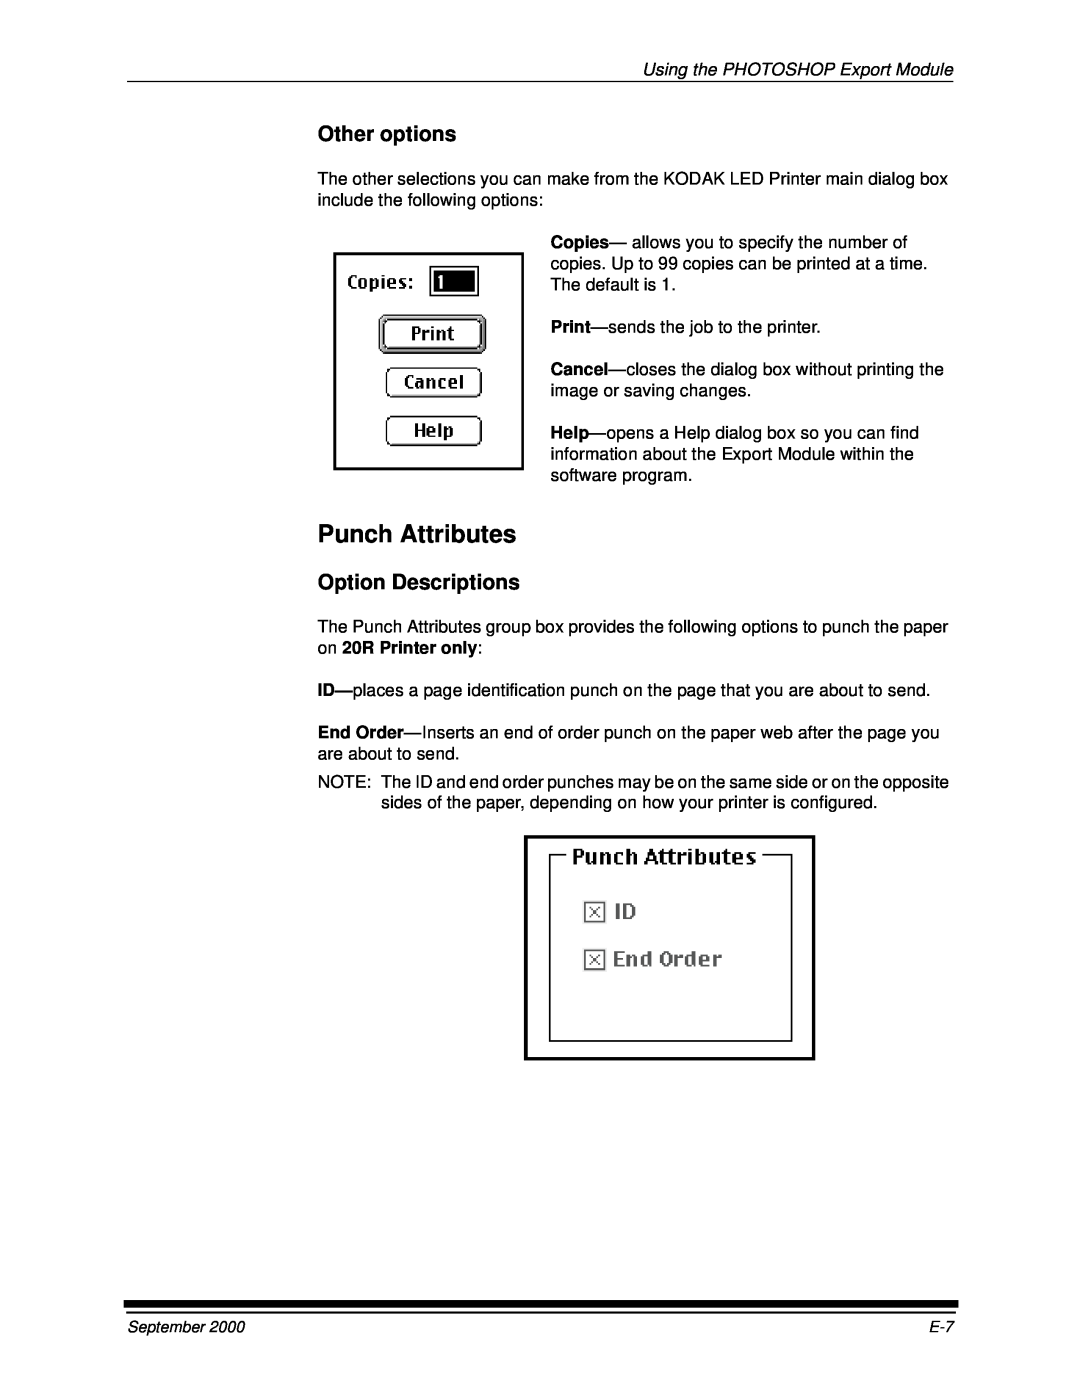 Kodak 20P manual Punch Attributes, Other options, Option Descriptions, Using the PHOTOSHOP Export Module 